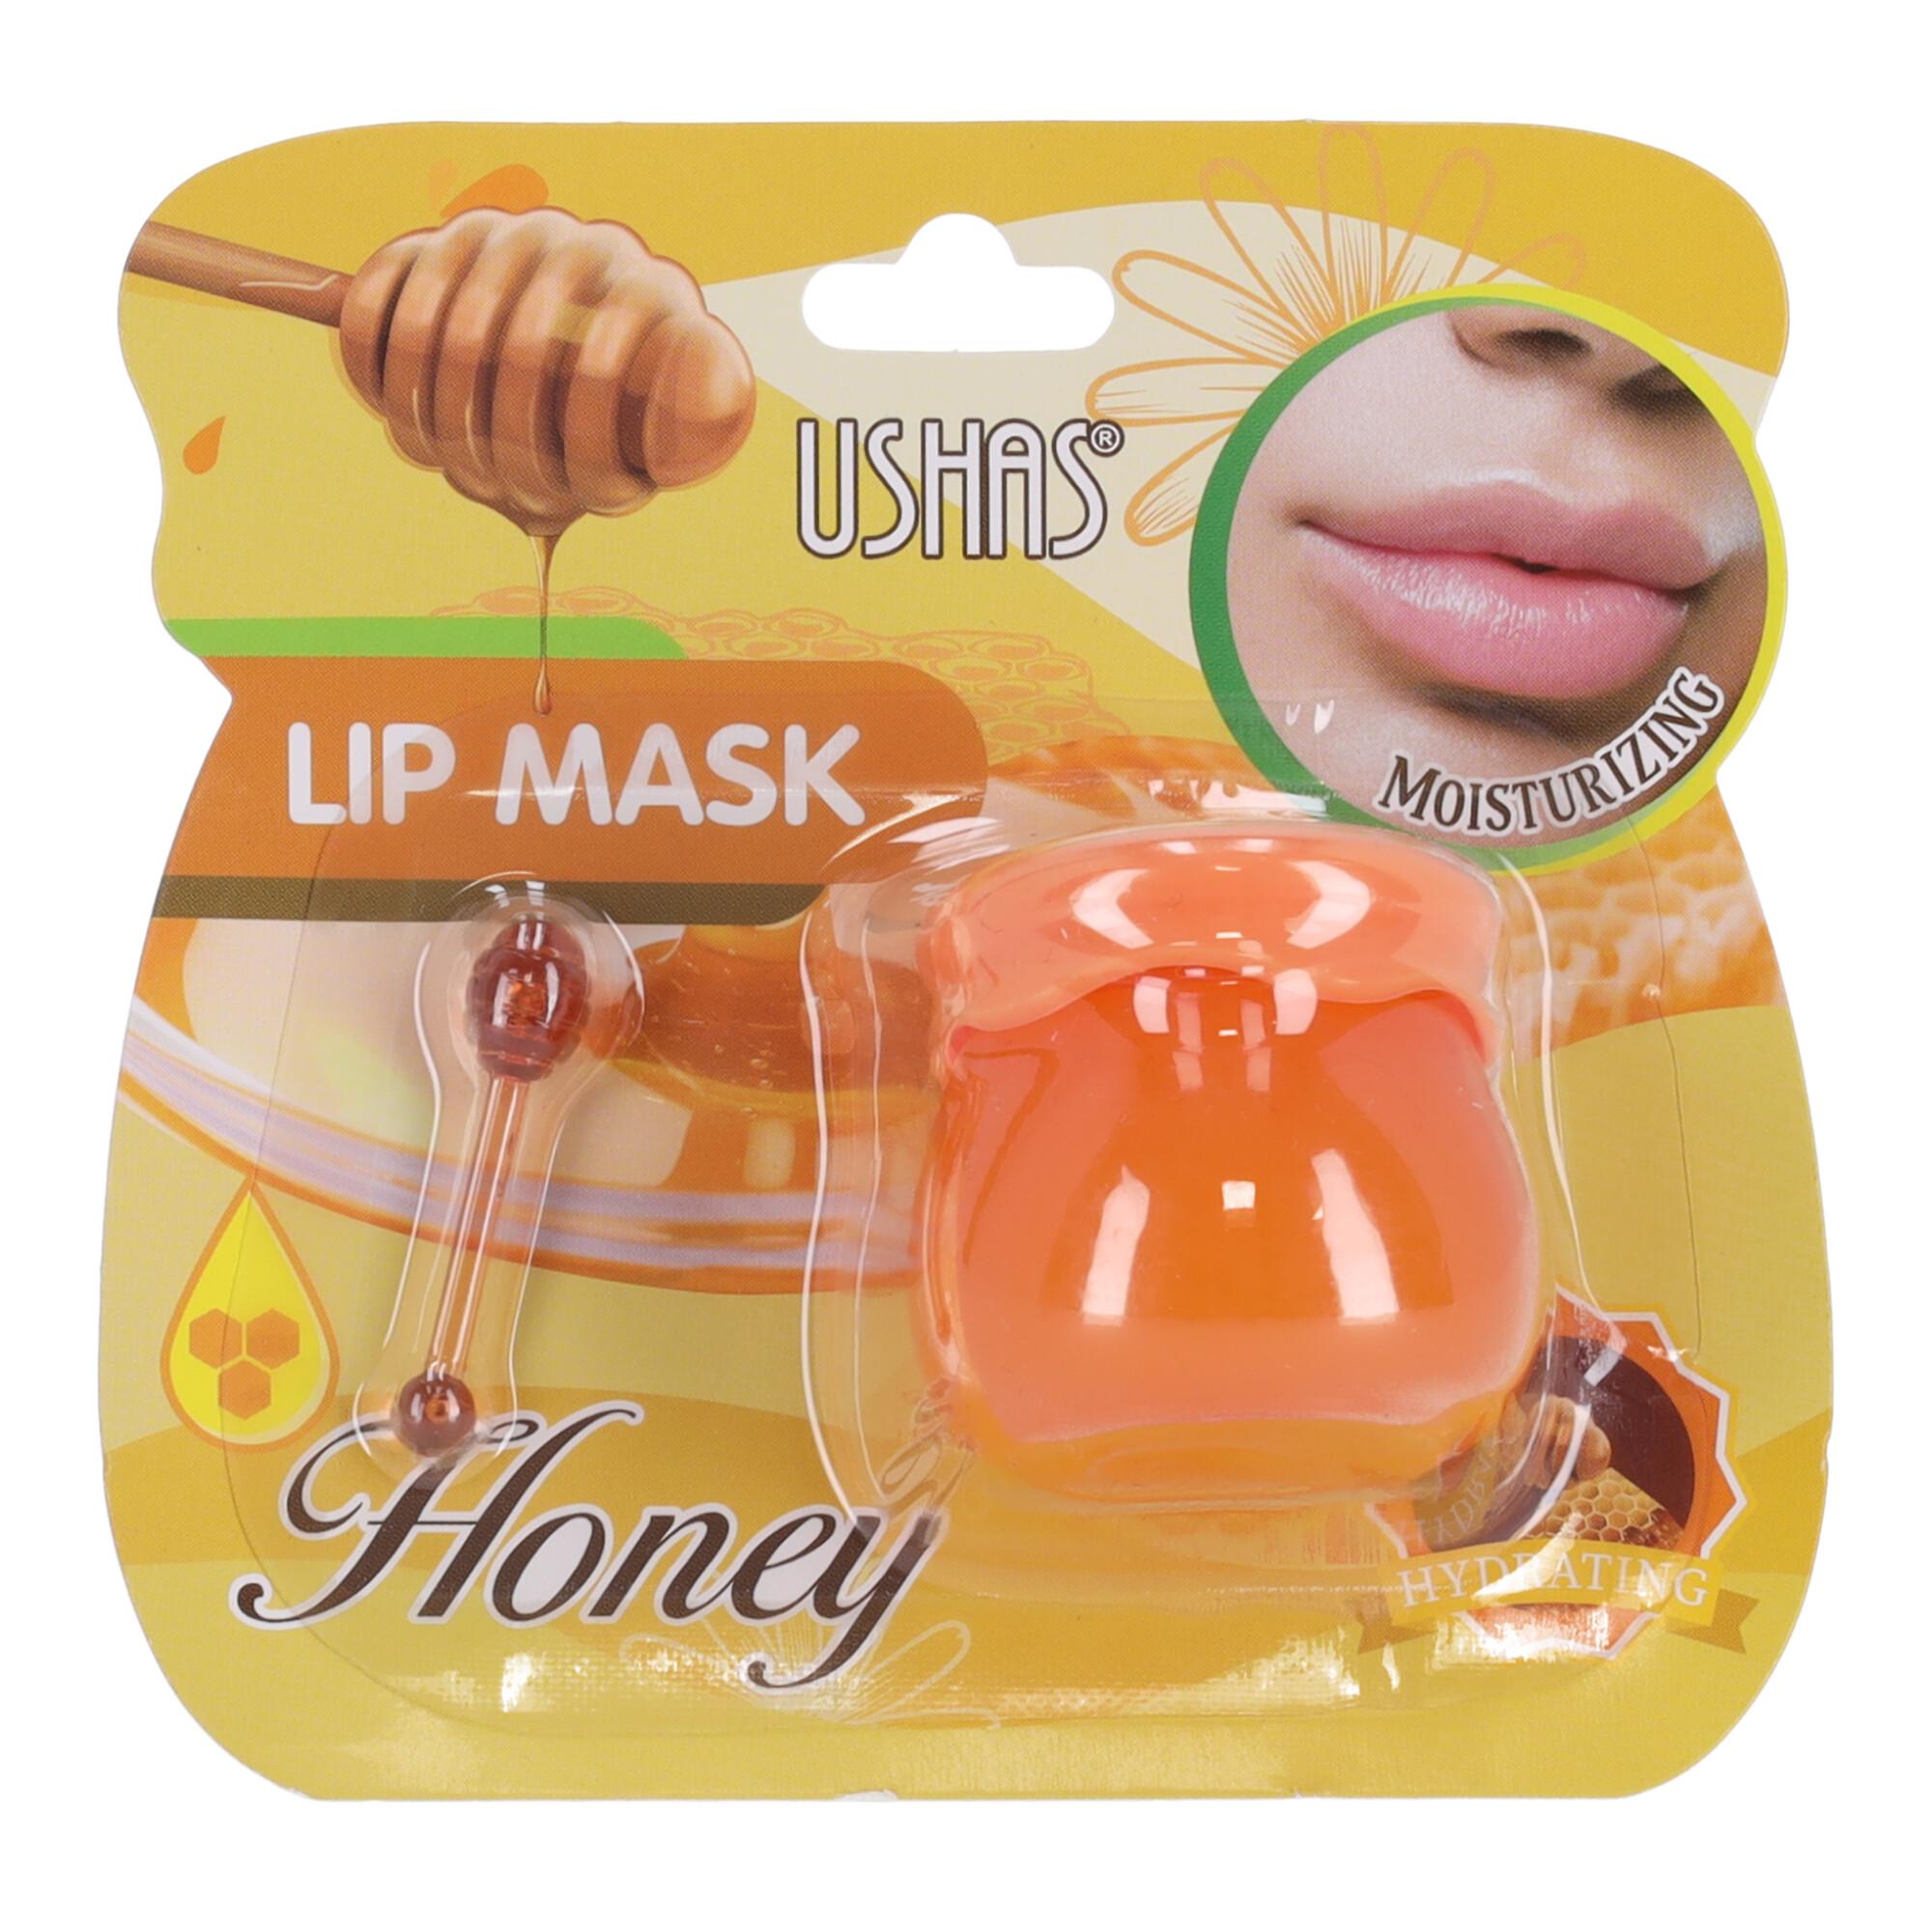 Moisturizing balm, USHAS lip gloss - honey